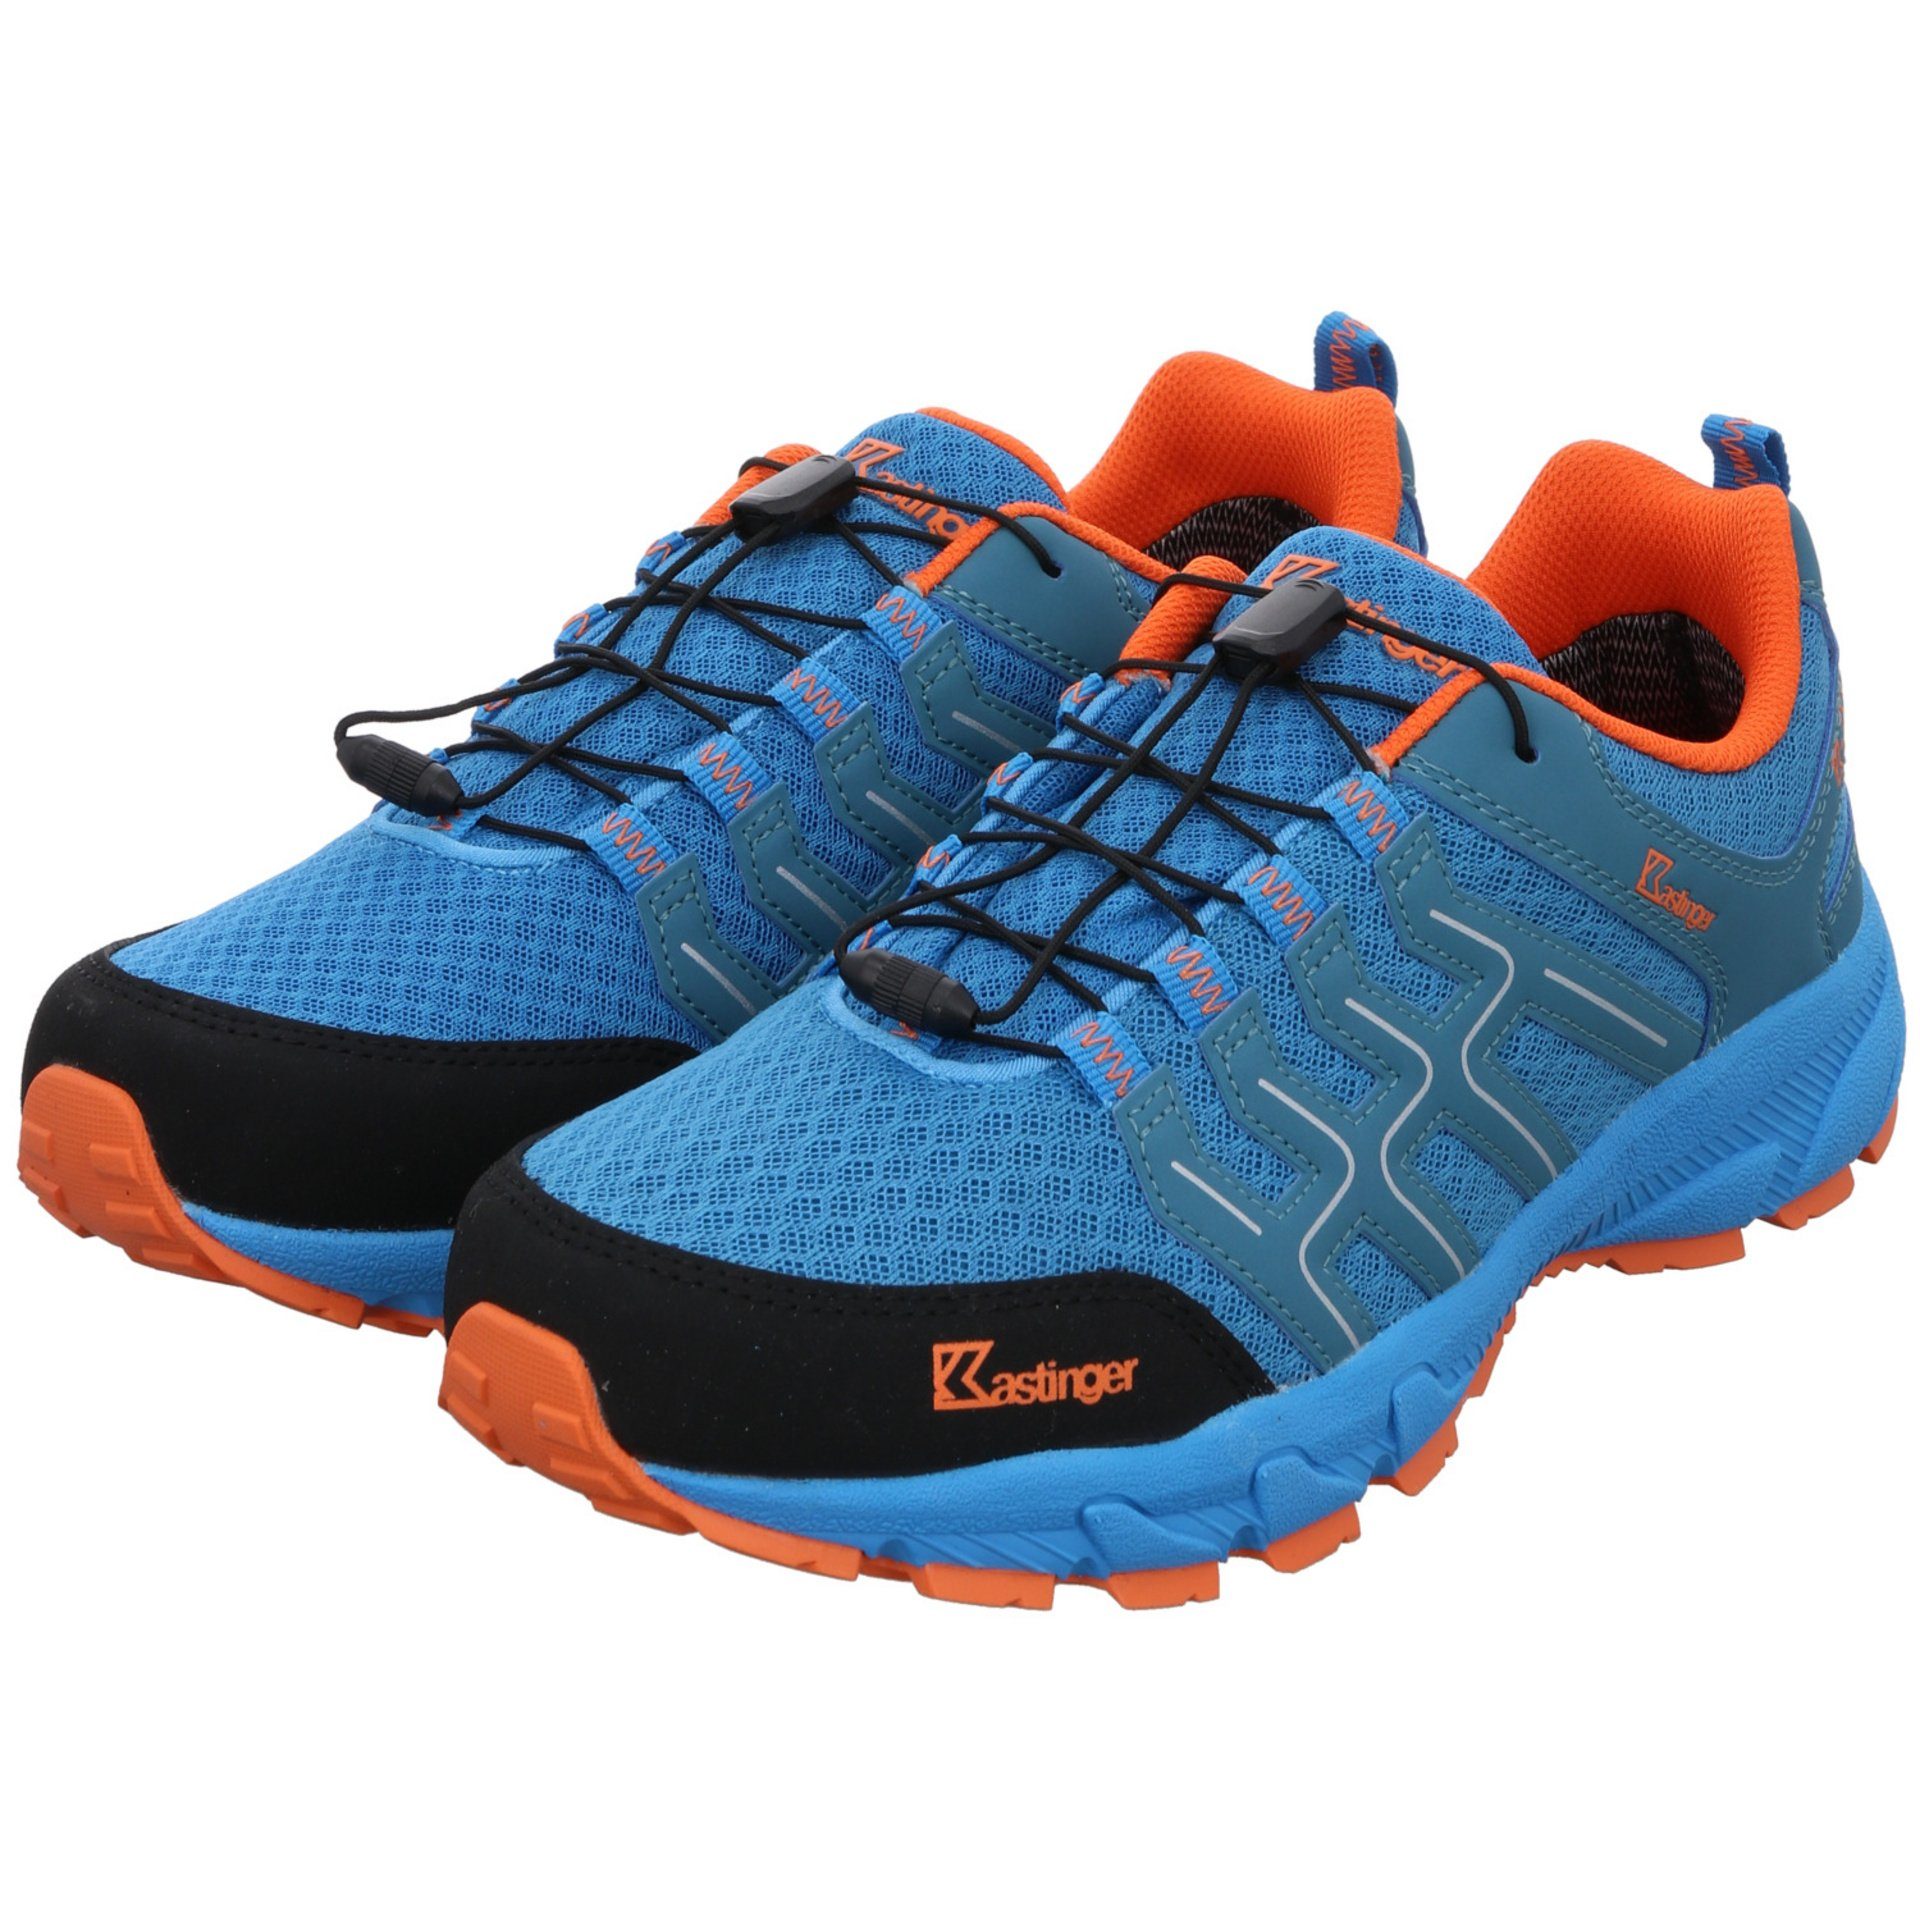 Kastinger Outdoorschuh blue/orange Outdoorschuh Damen Outdoor Schuhe Synthetikkombination Trailrunner